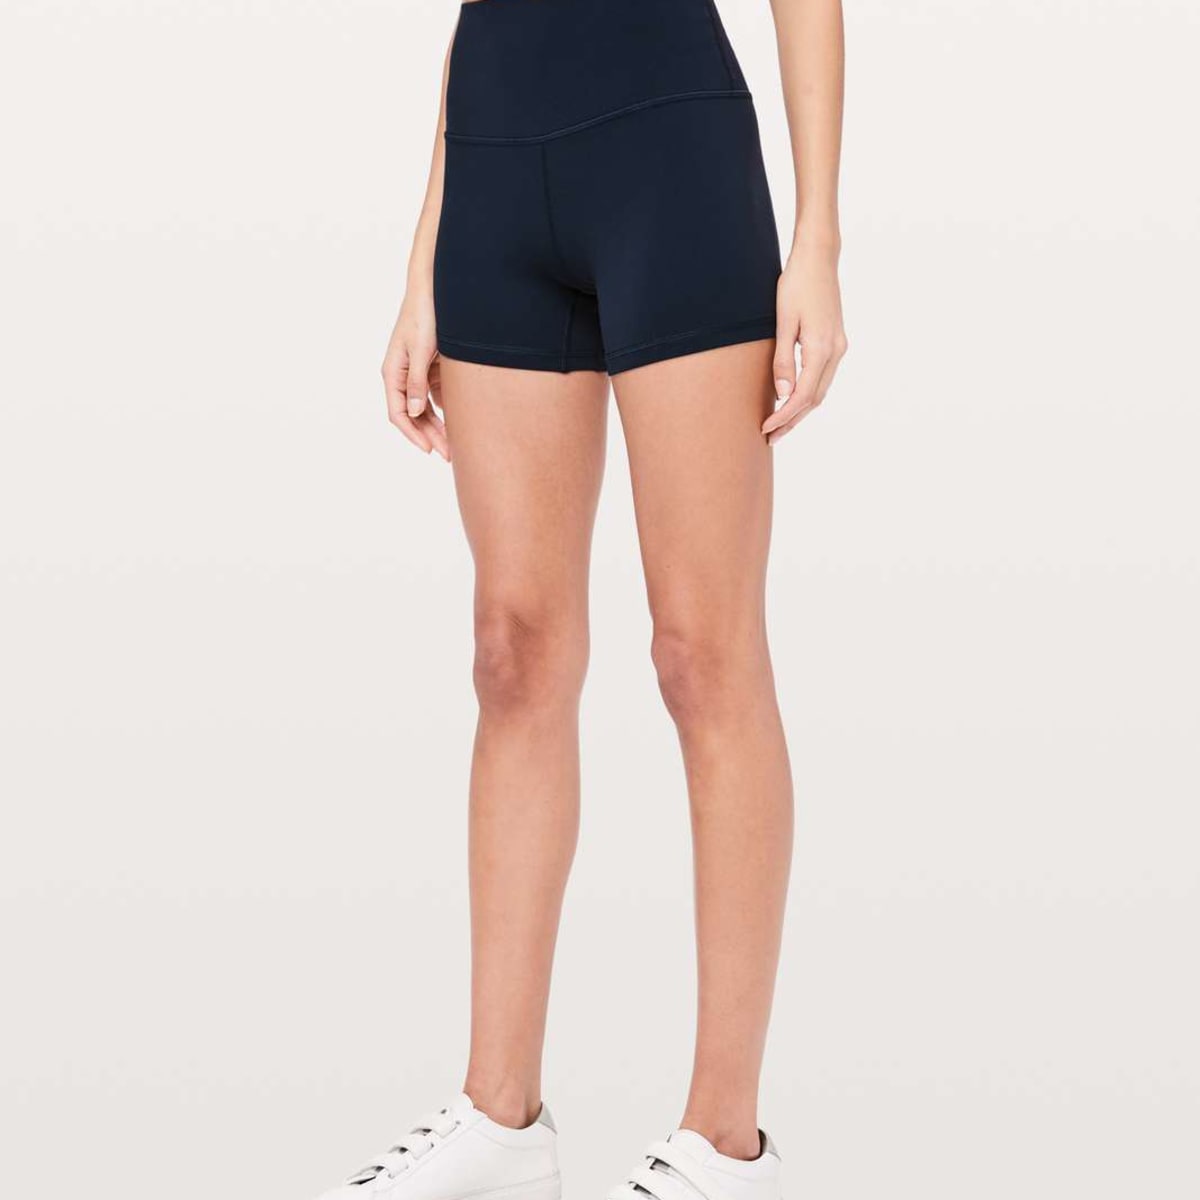 lululemon align shorts review